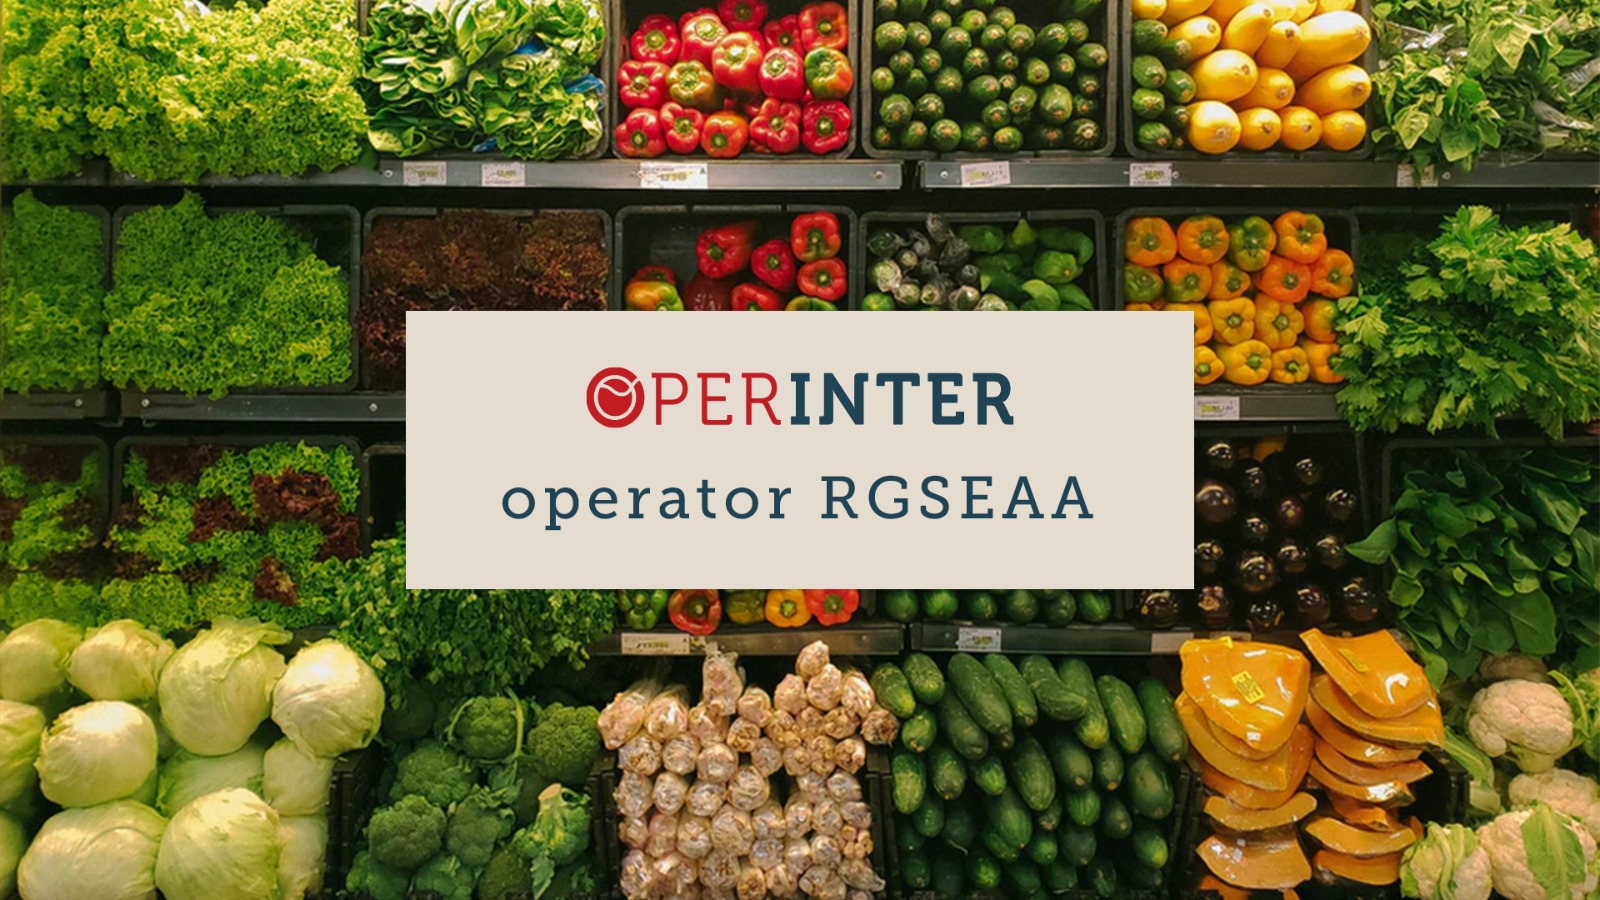 Operinter Andalucía, certified as RGSEAA